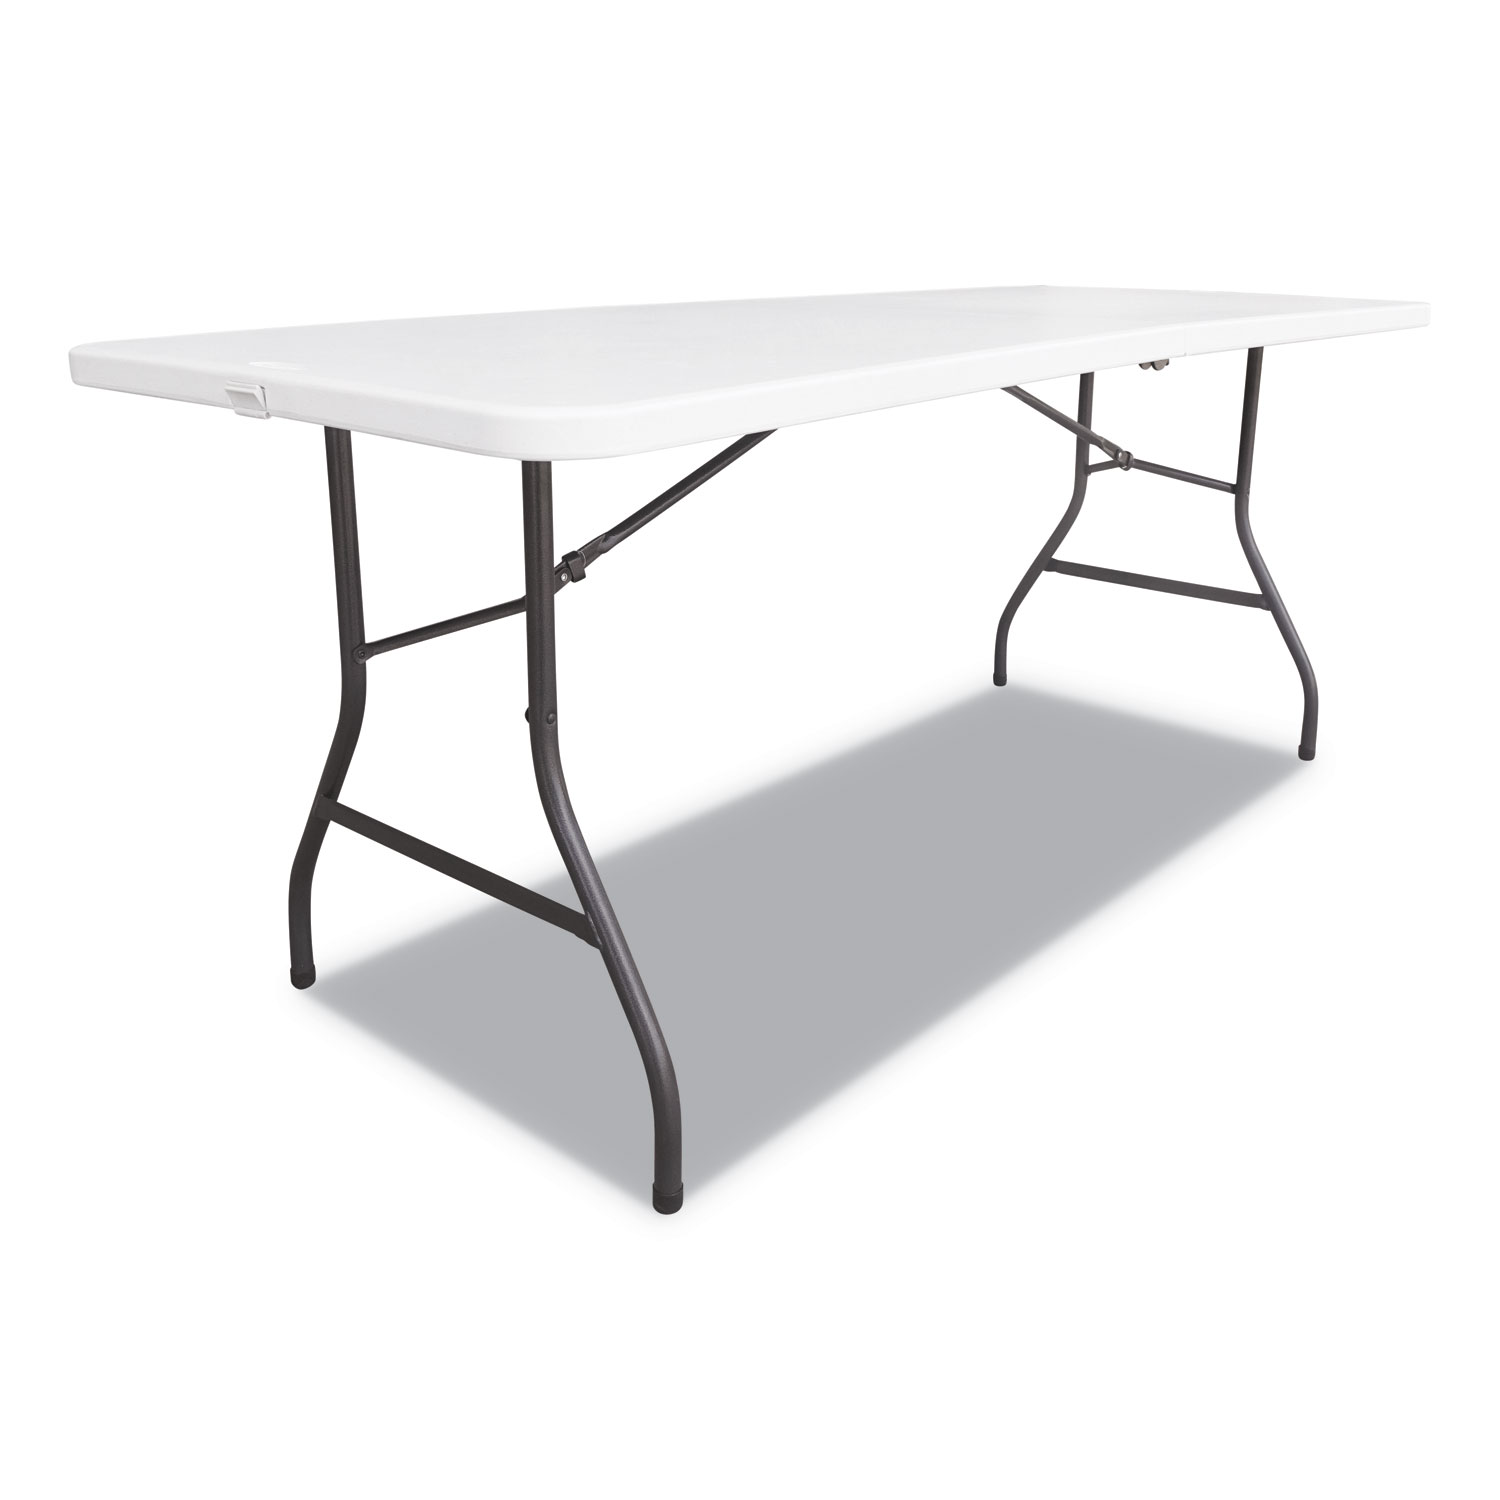  Alera ALEFR60H Fold-in-Half Resin Folding Table, 60w x 29 5/8d x 29 1/4h, White (ALEFR60H) 